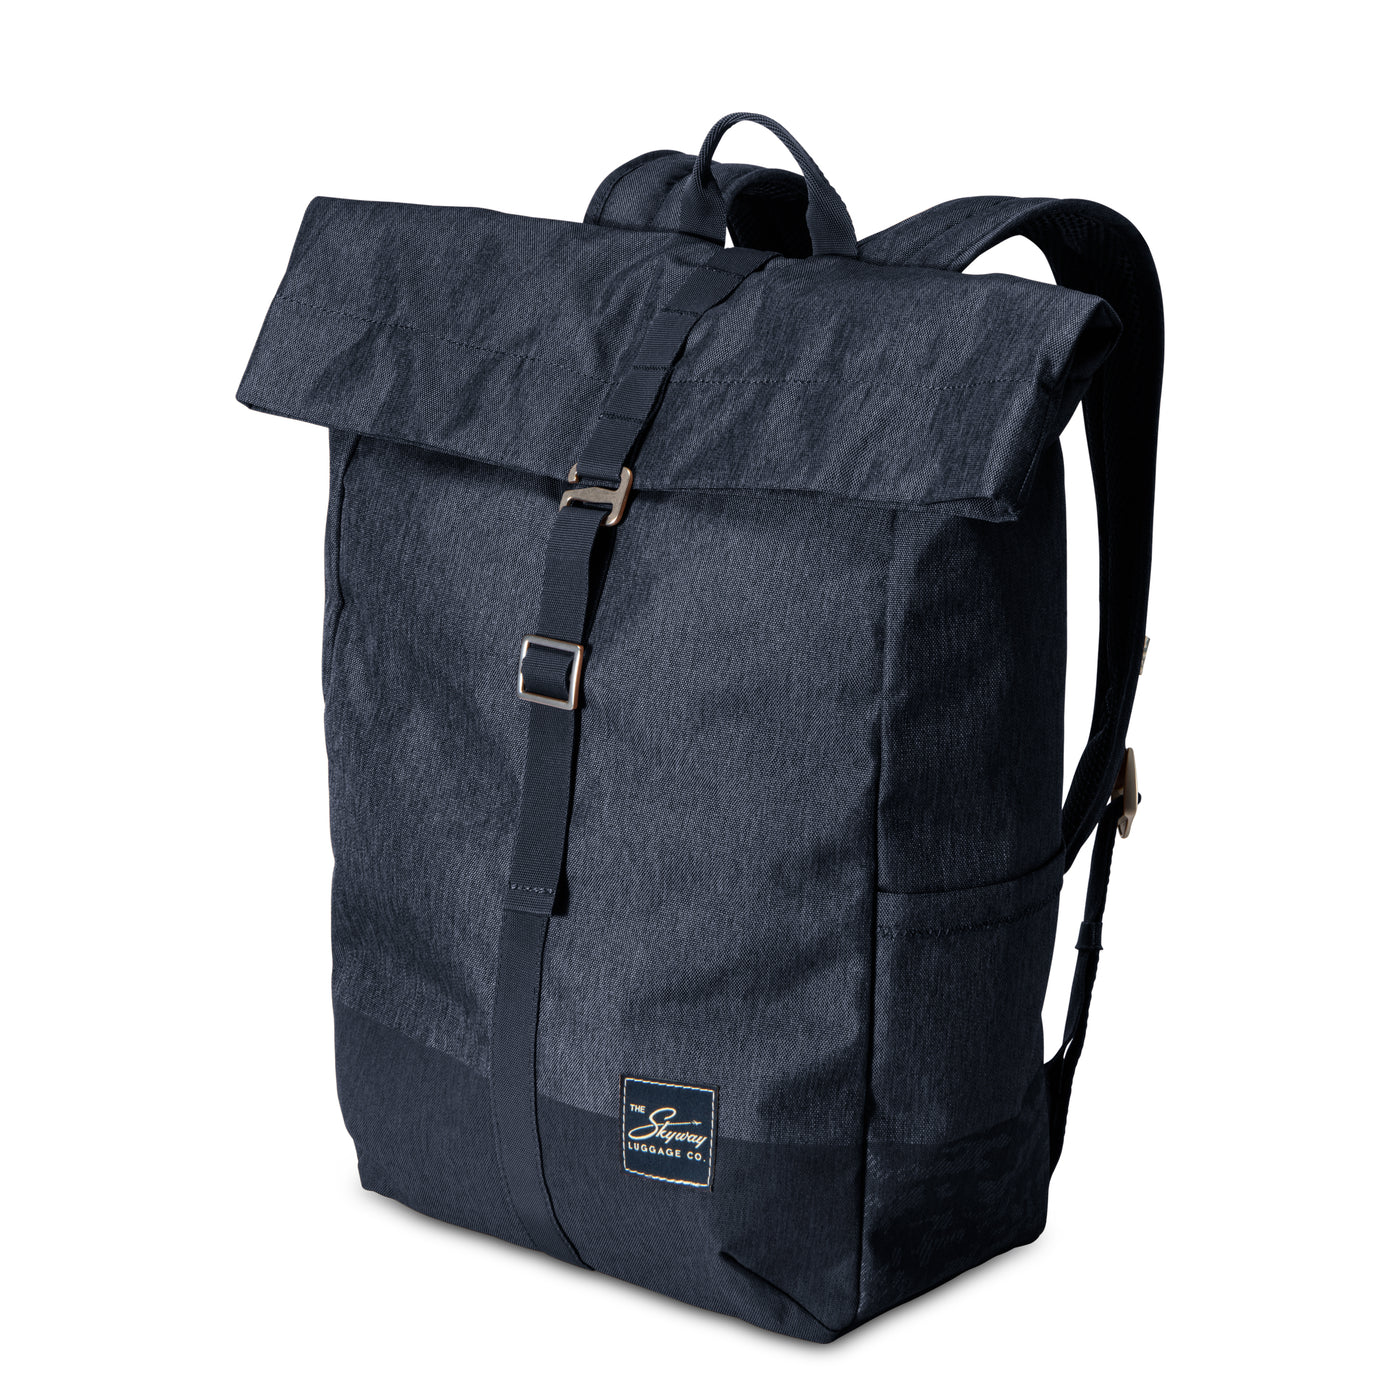 Rainier RollTop Commuter Backpack - 20L